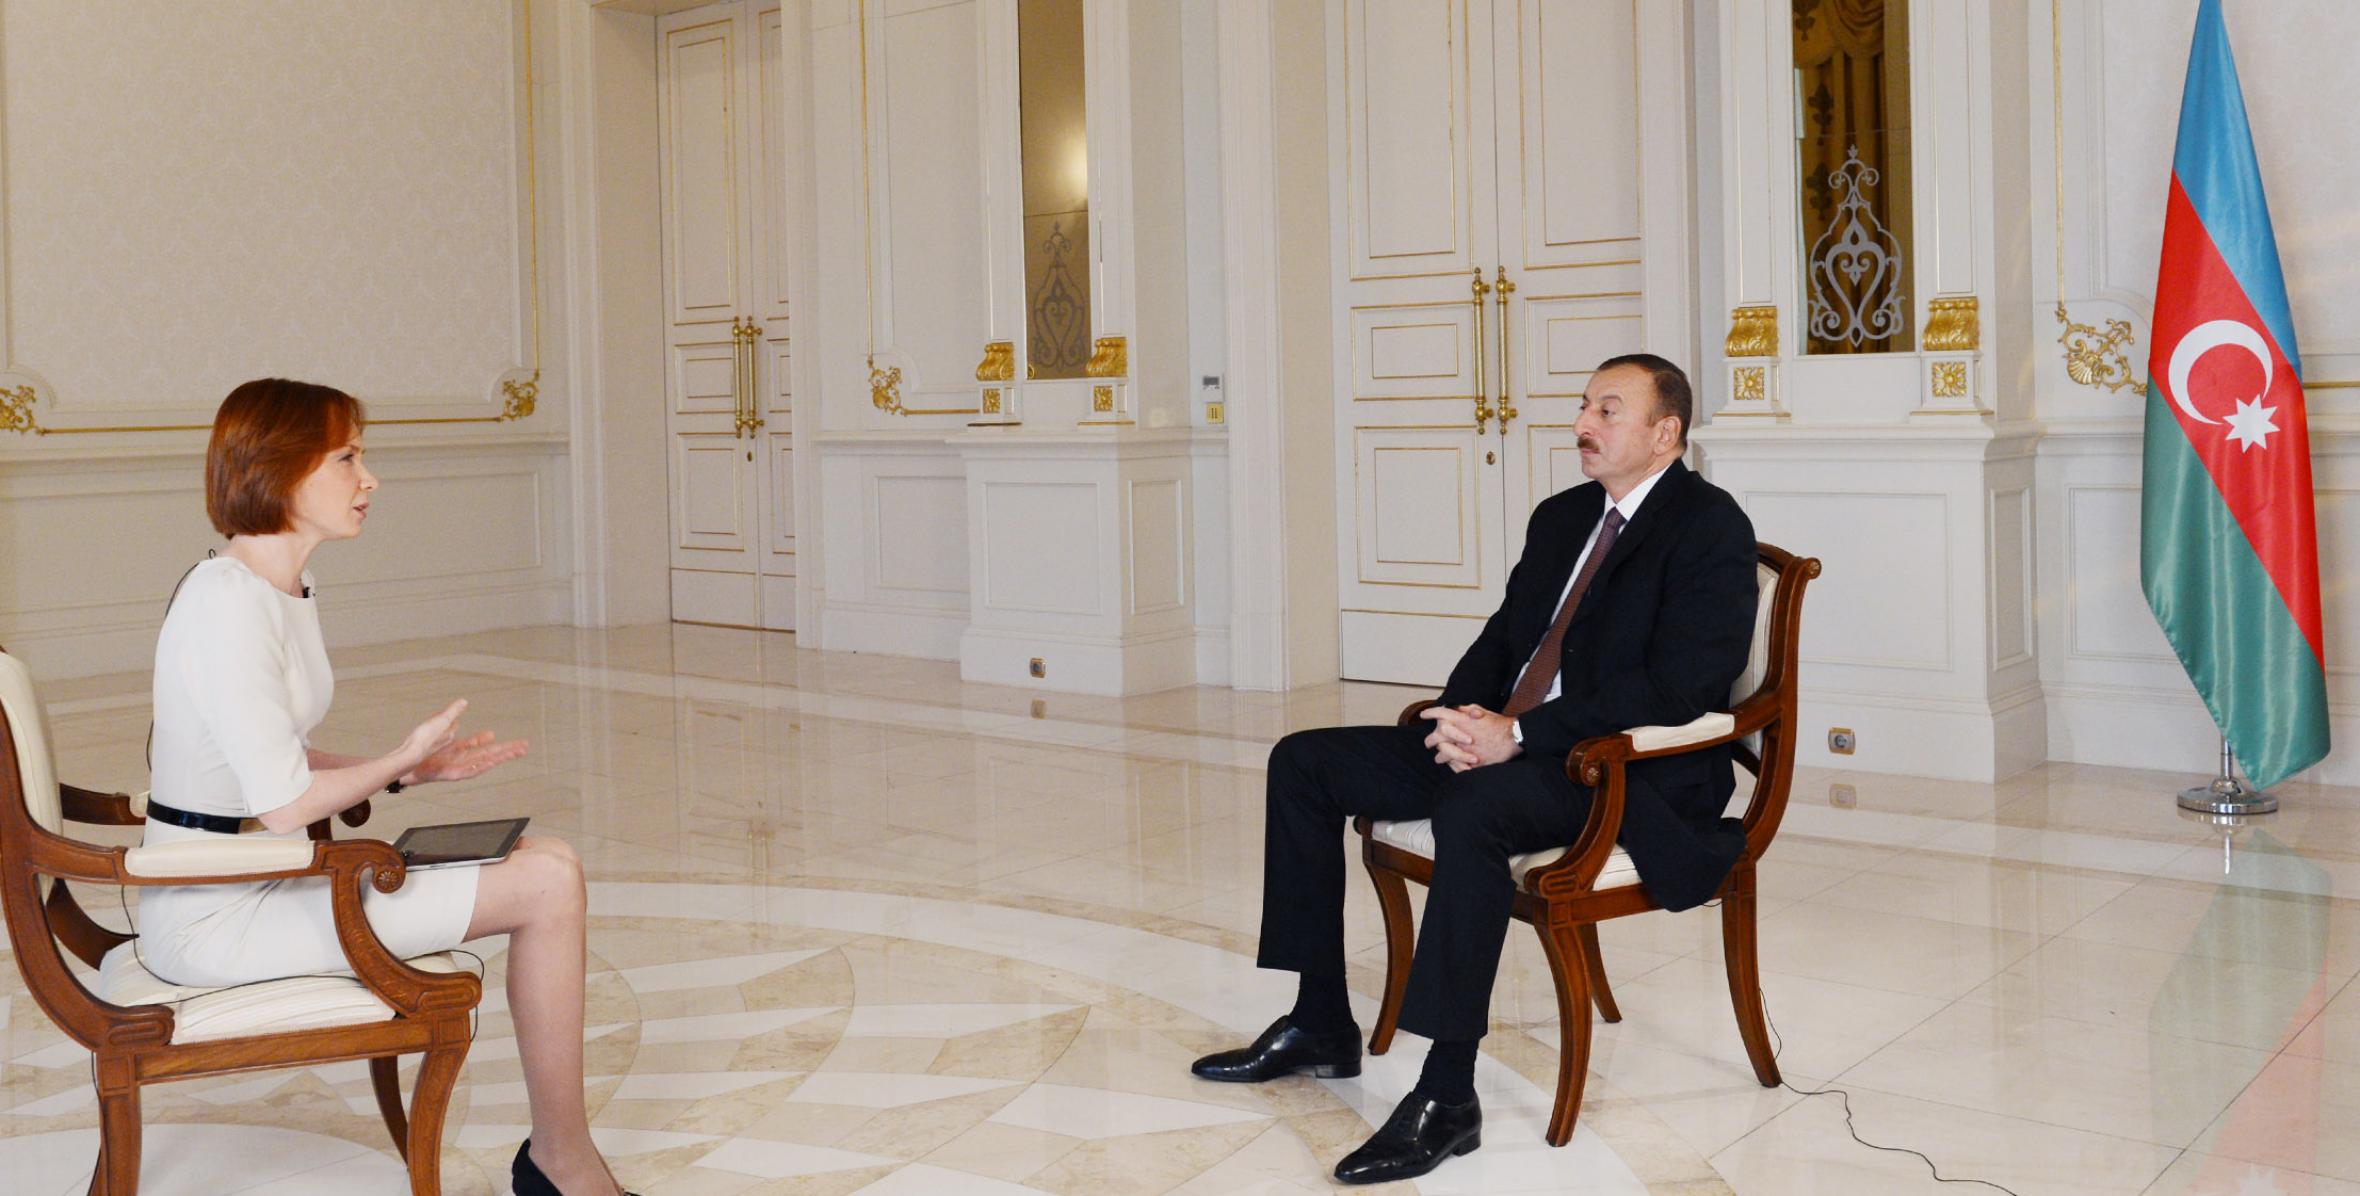 Ilham Aliyev was interviewed by Russia-24 TV channel